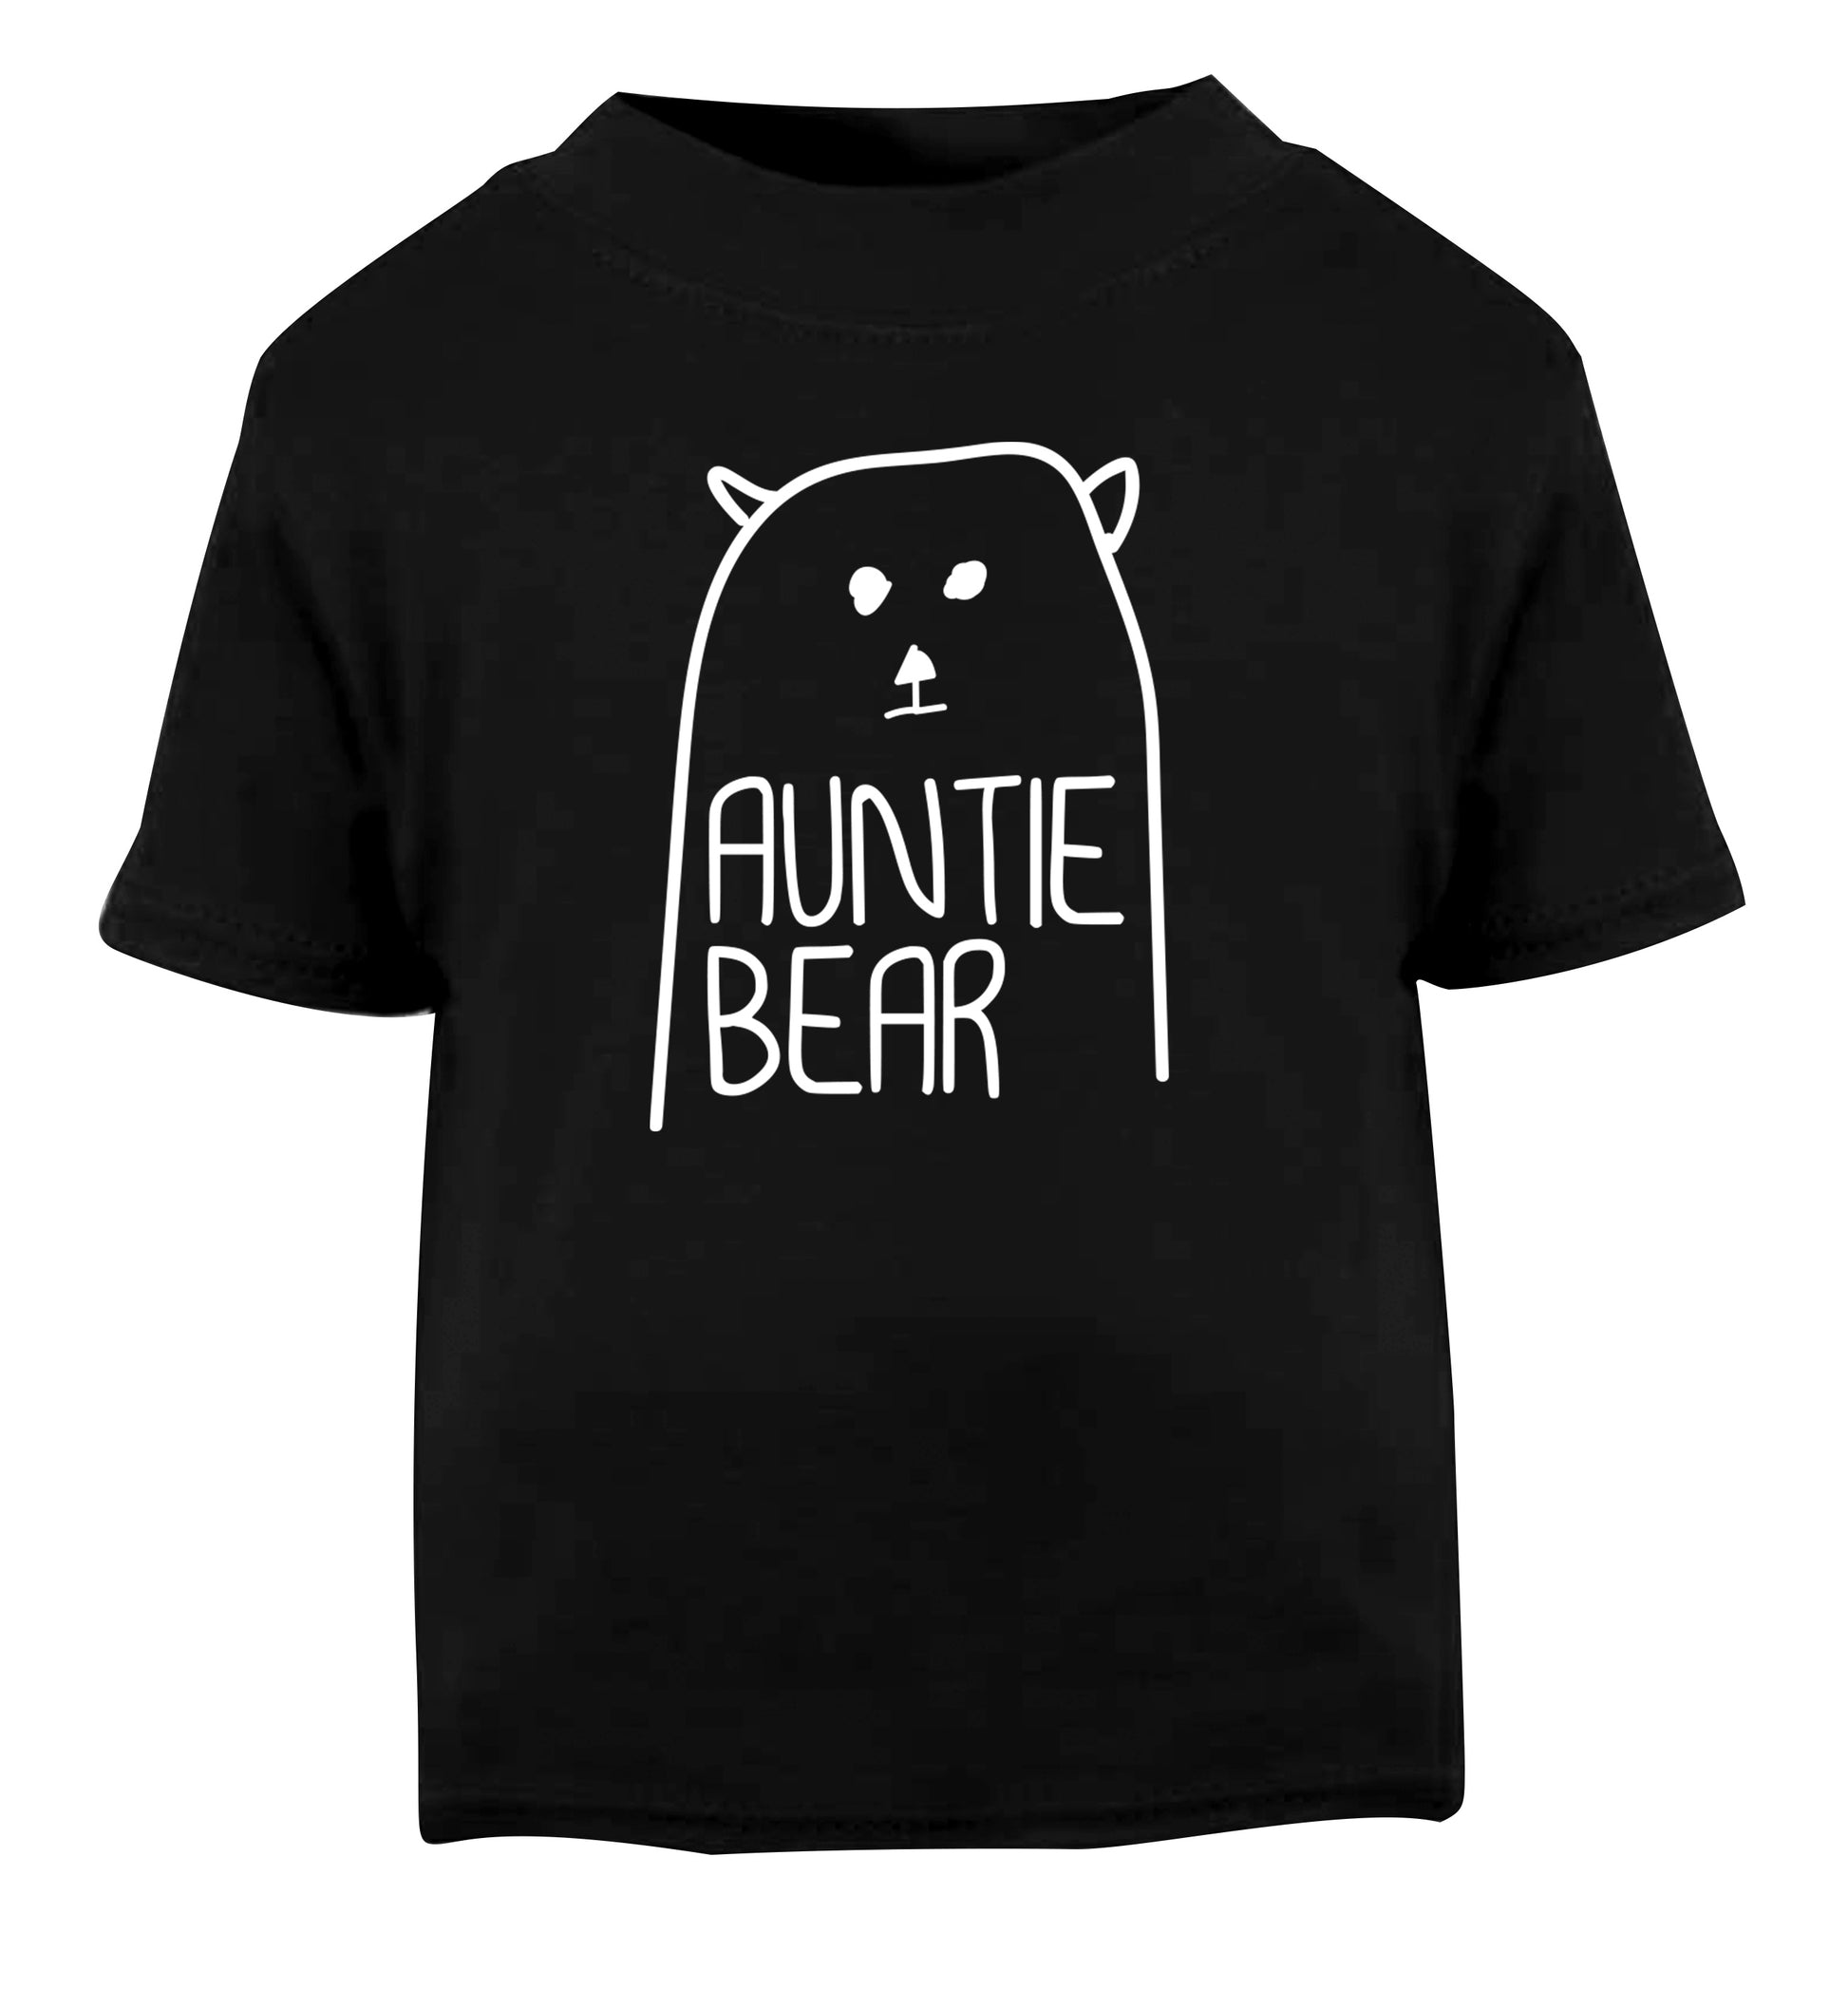 Auntie bear Black Baby Toddler Tshirt 2 years